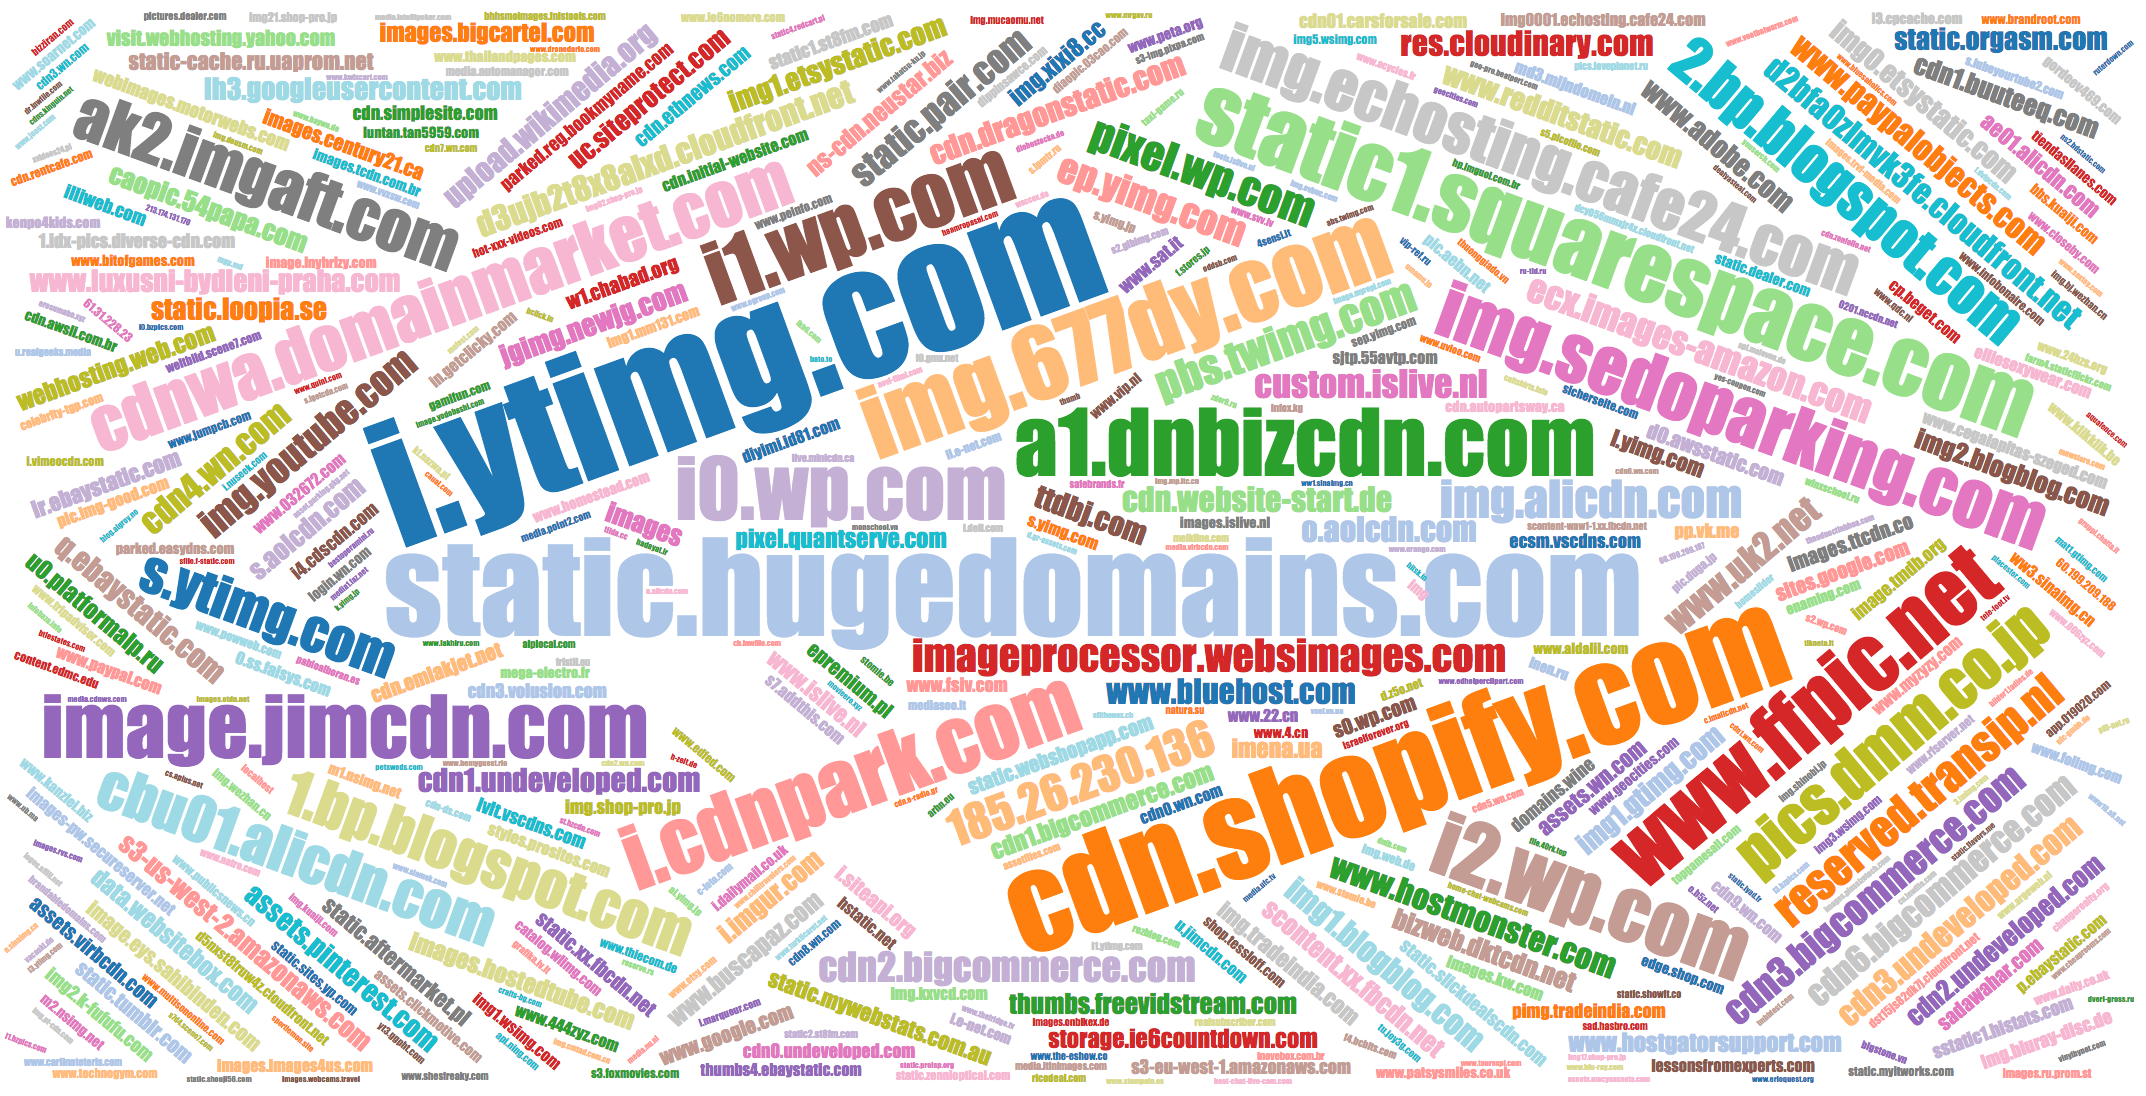 Popular names of IMG domains xn--eckp2gz283bohsa.jp, x.1138mm.com, etc.